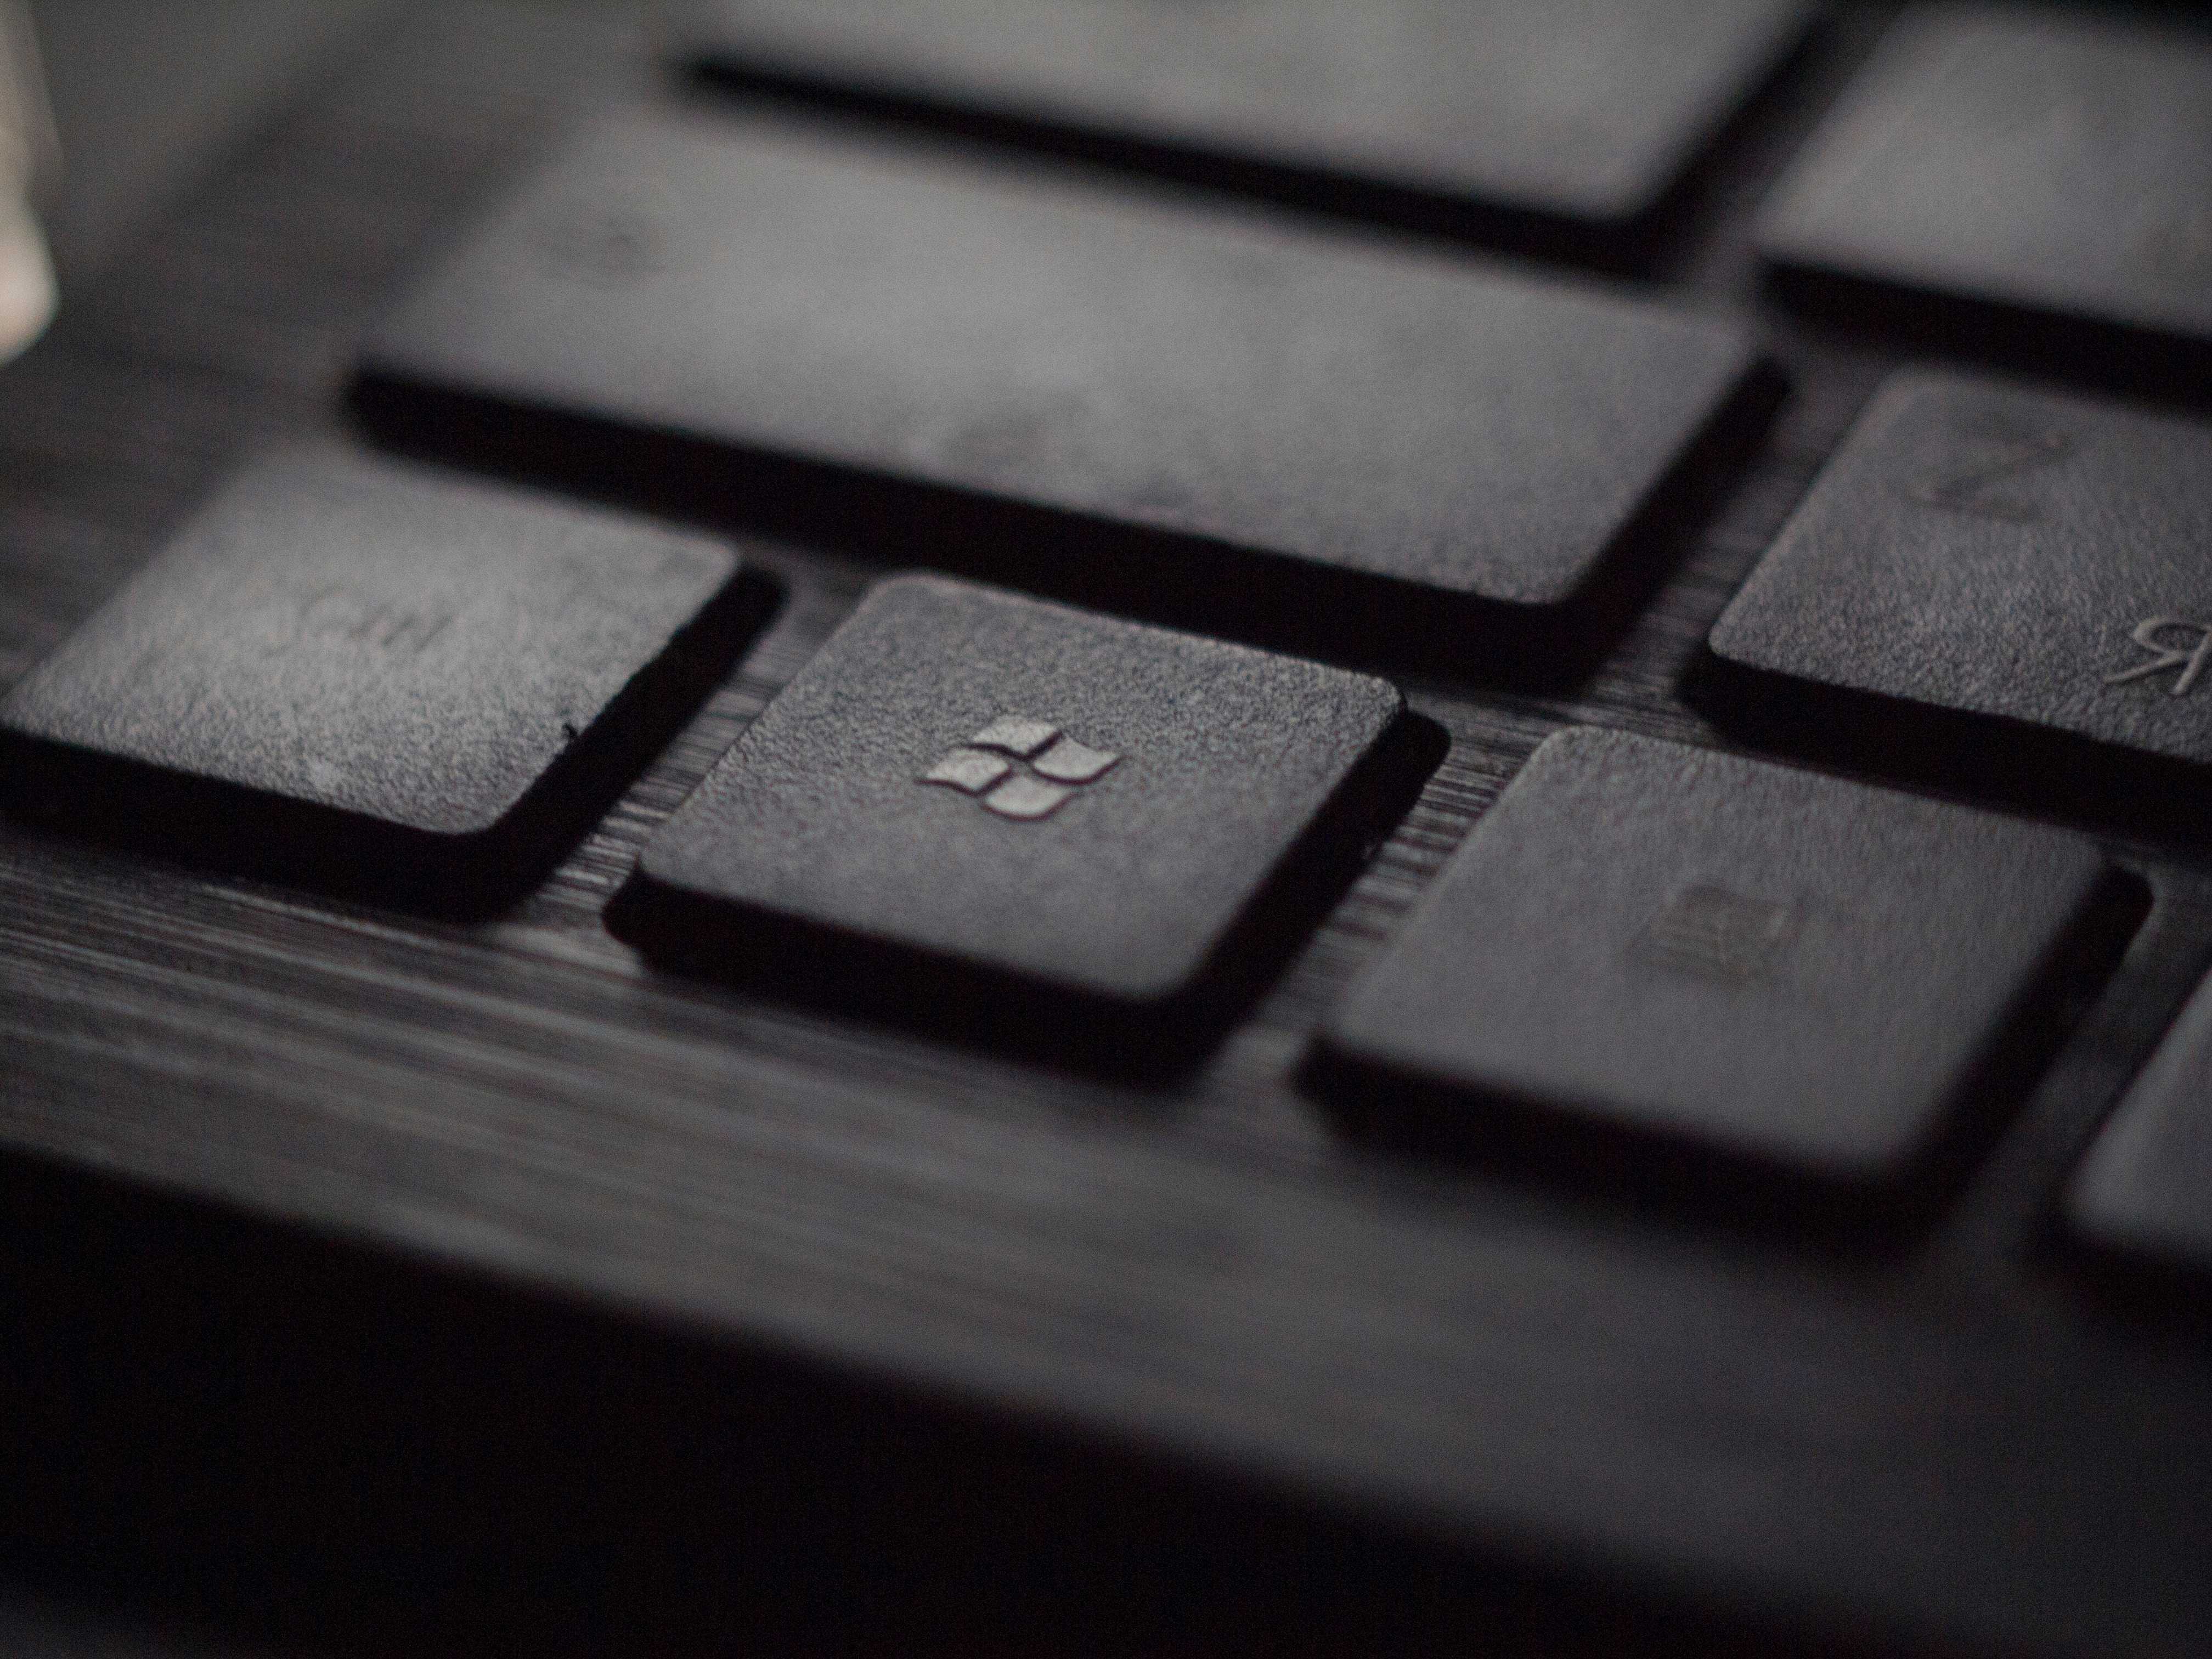 Keyboard with Windows logo